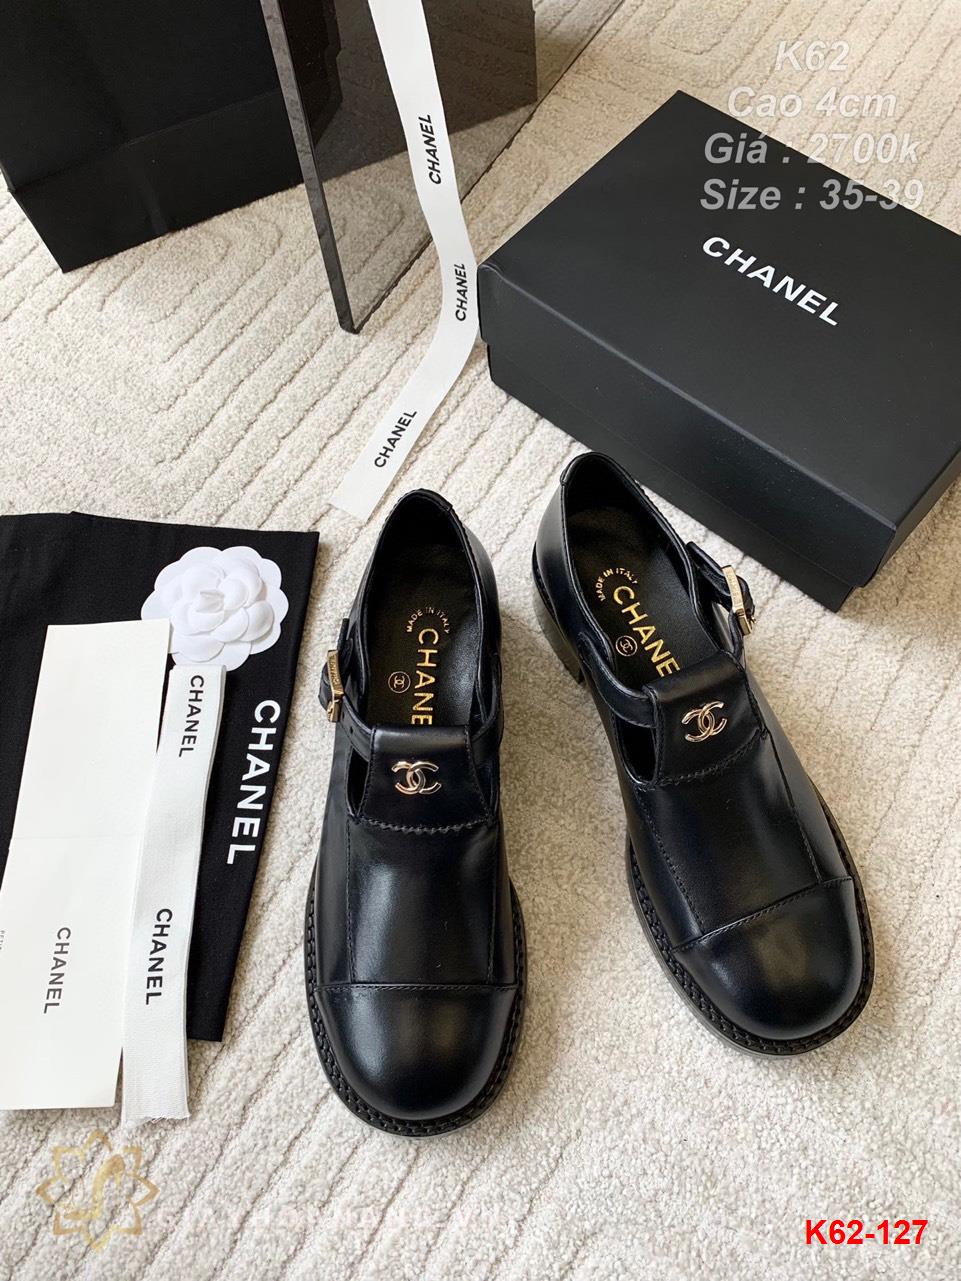 K62-127 Chanel giày cao 4cm siêu cấp